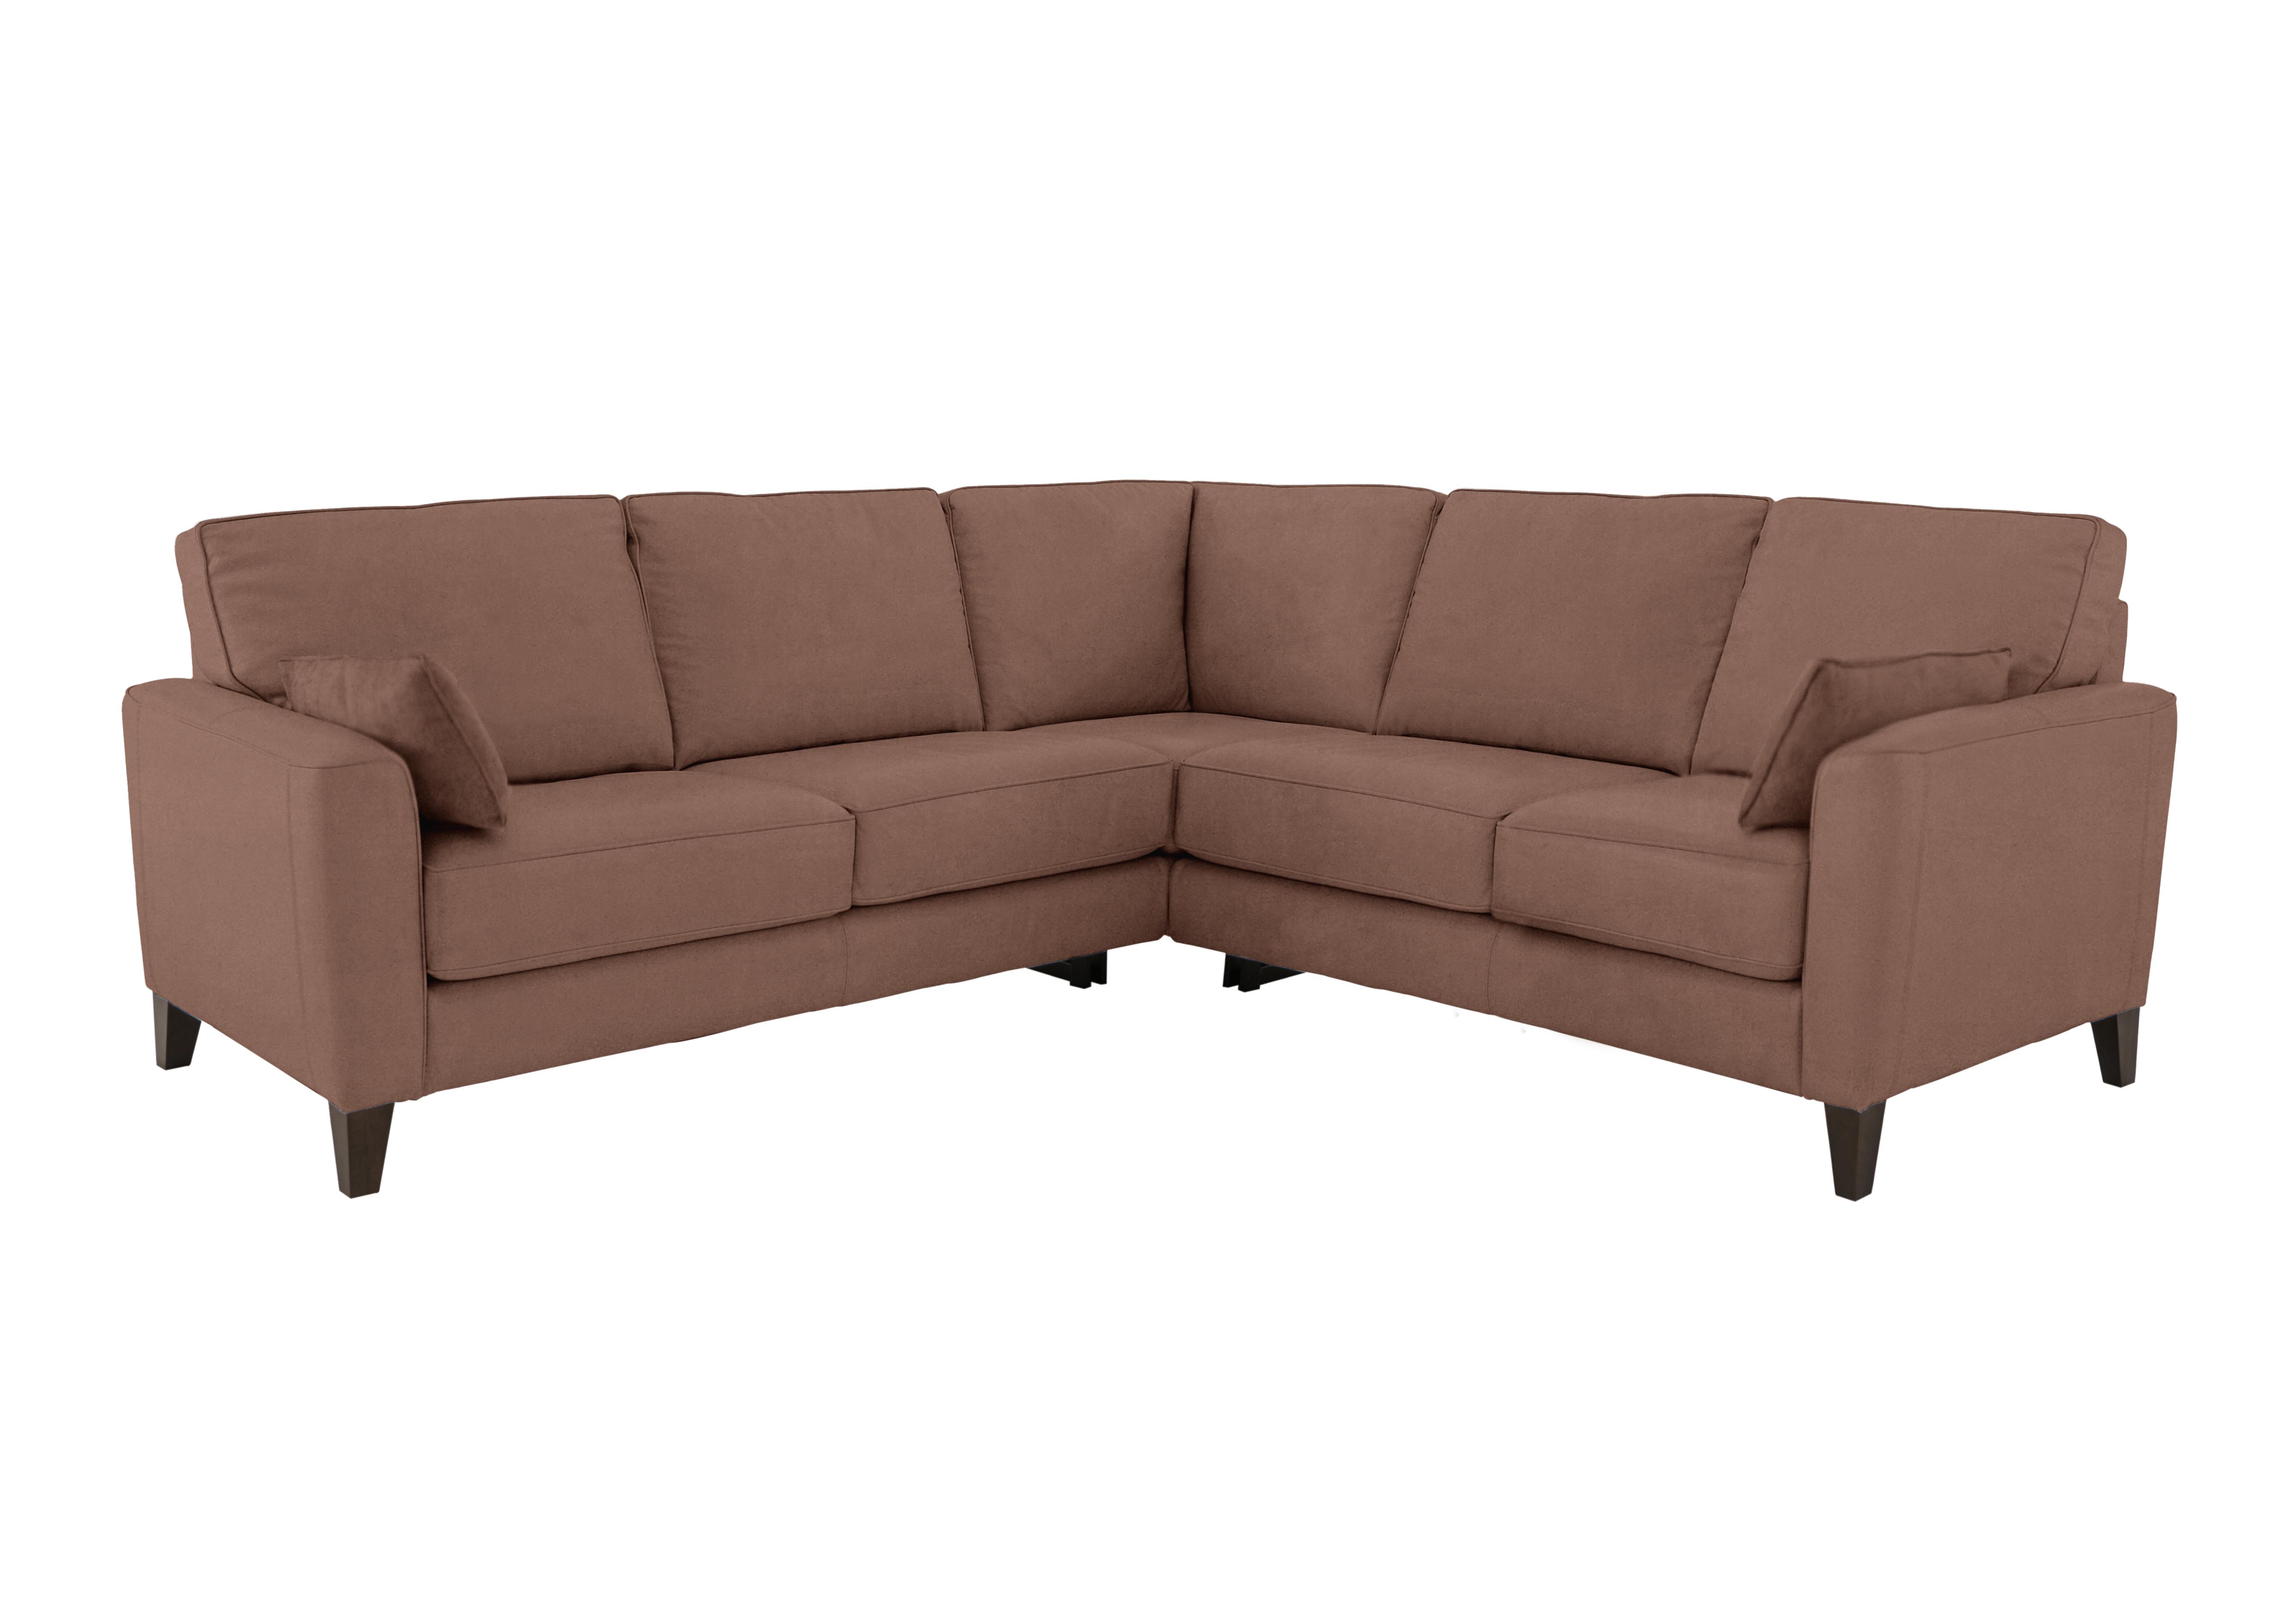 Brondby Large Fabric Corner Sofa in Bfa-Blj-R05 Hazelnut on Furniture Village